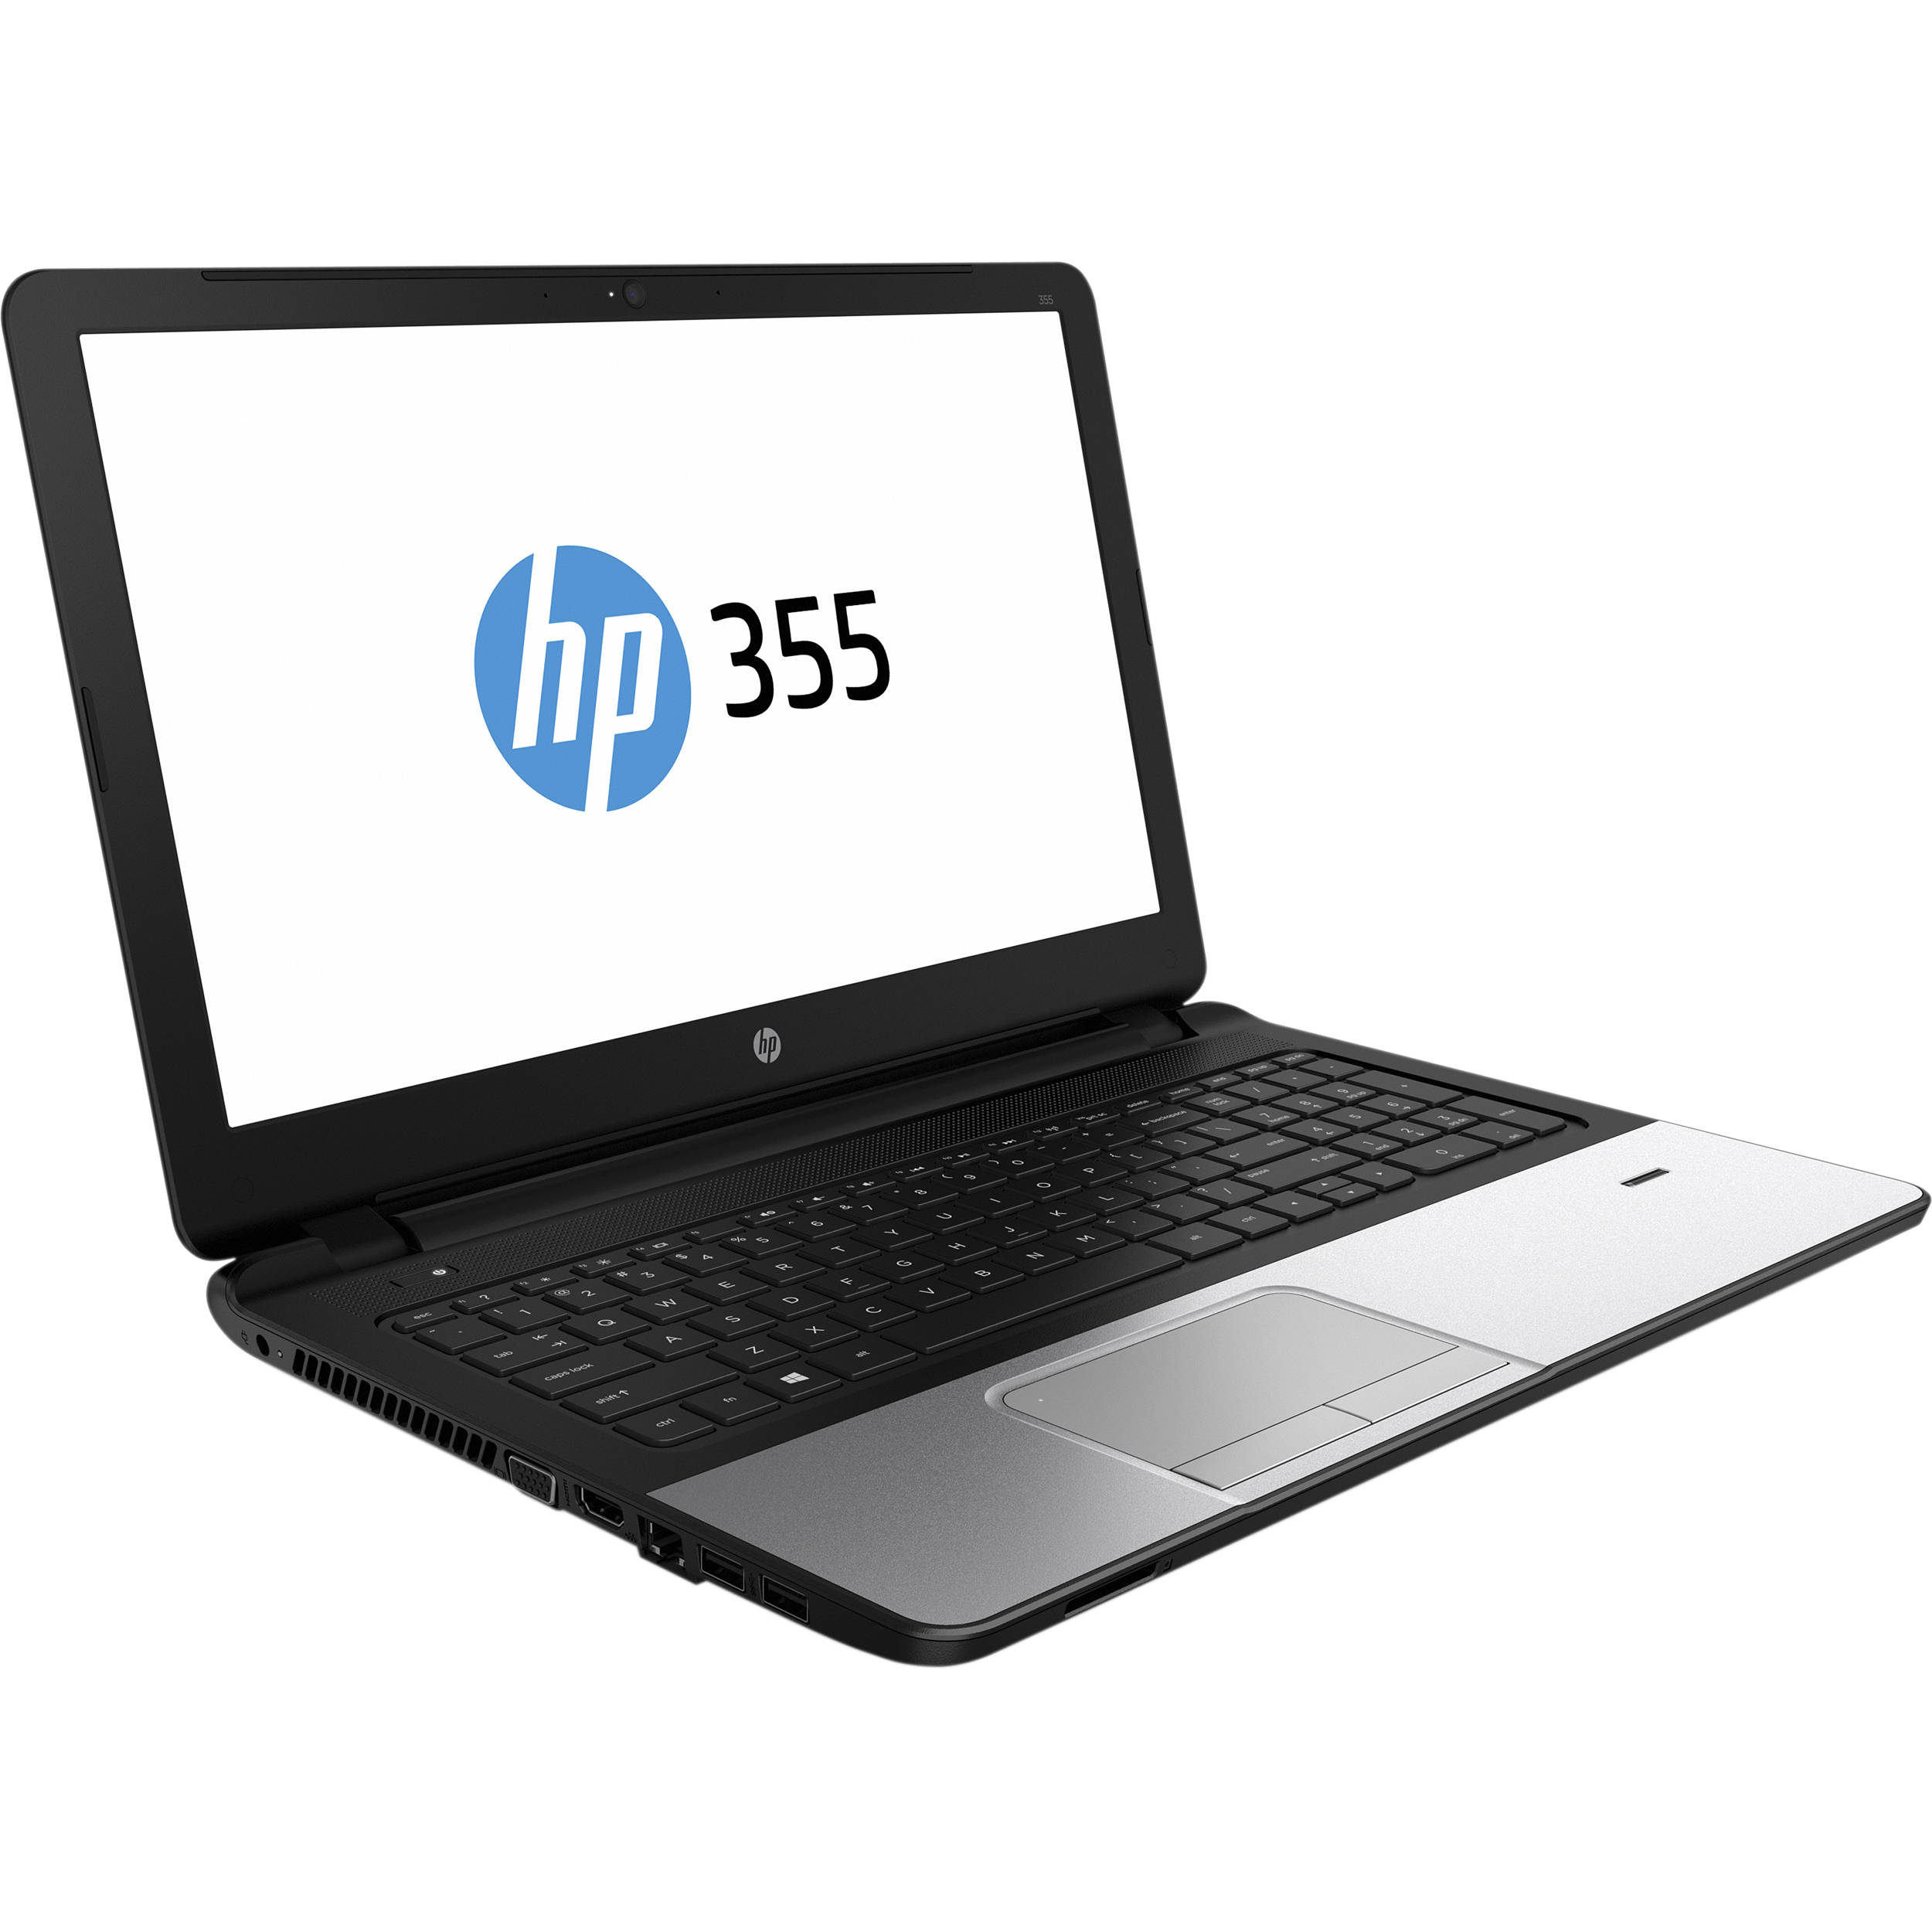 355 G2 Notebook PC